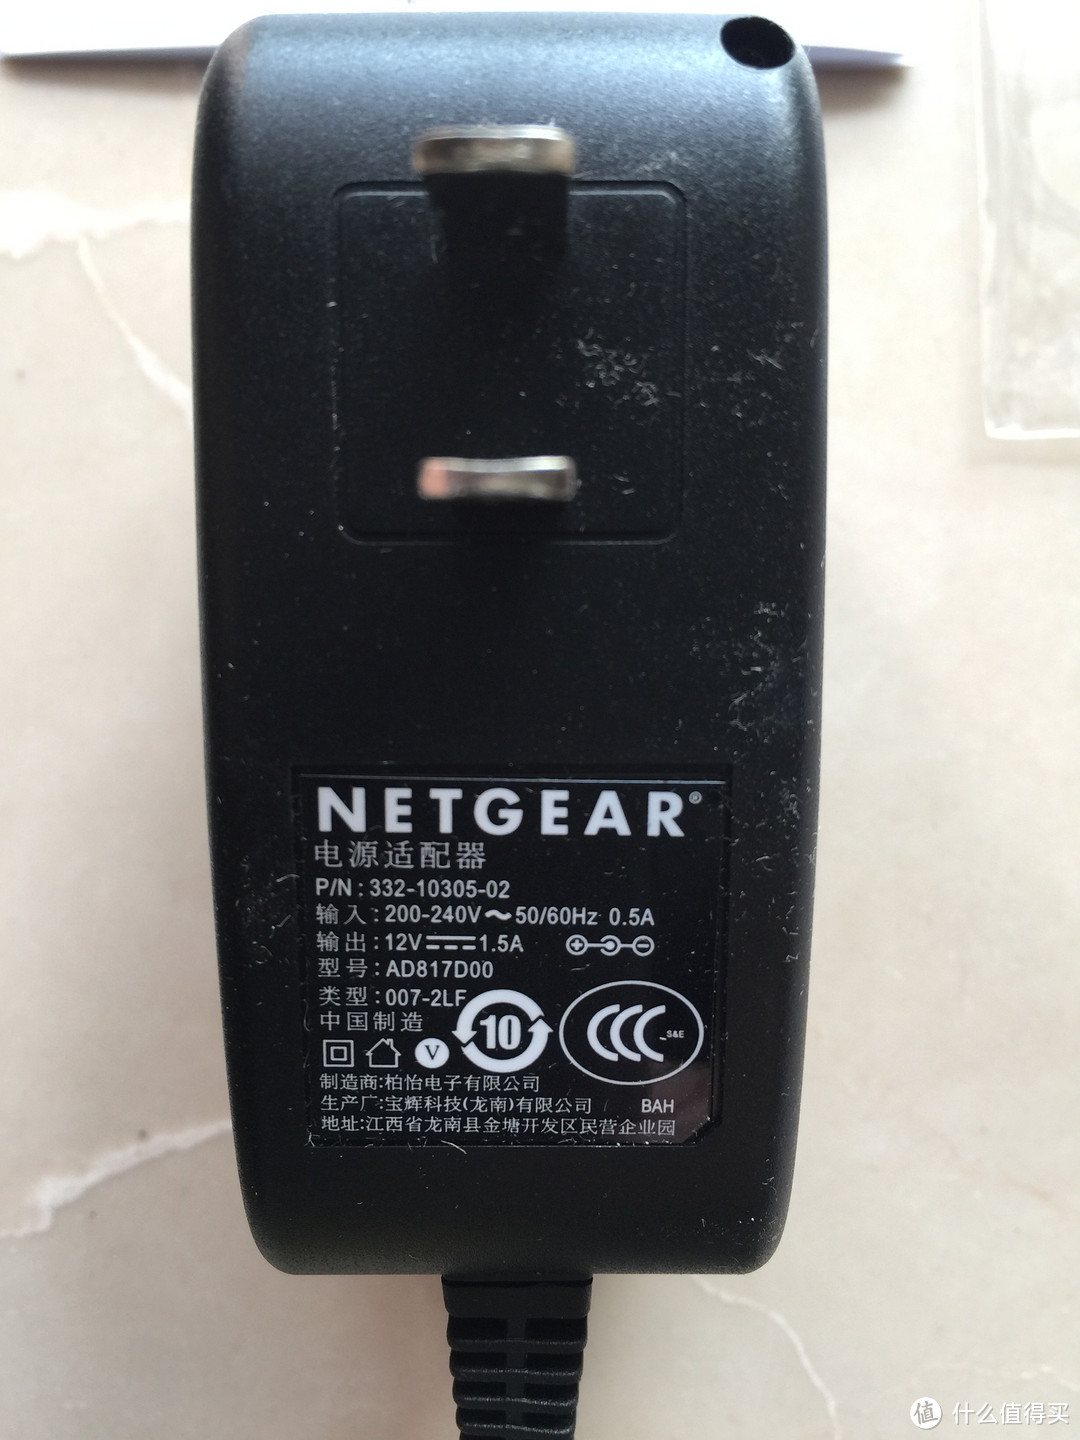 NETGEAR 美国网件 R4300评测